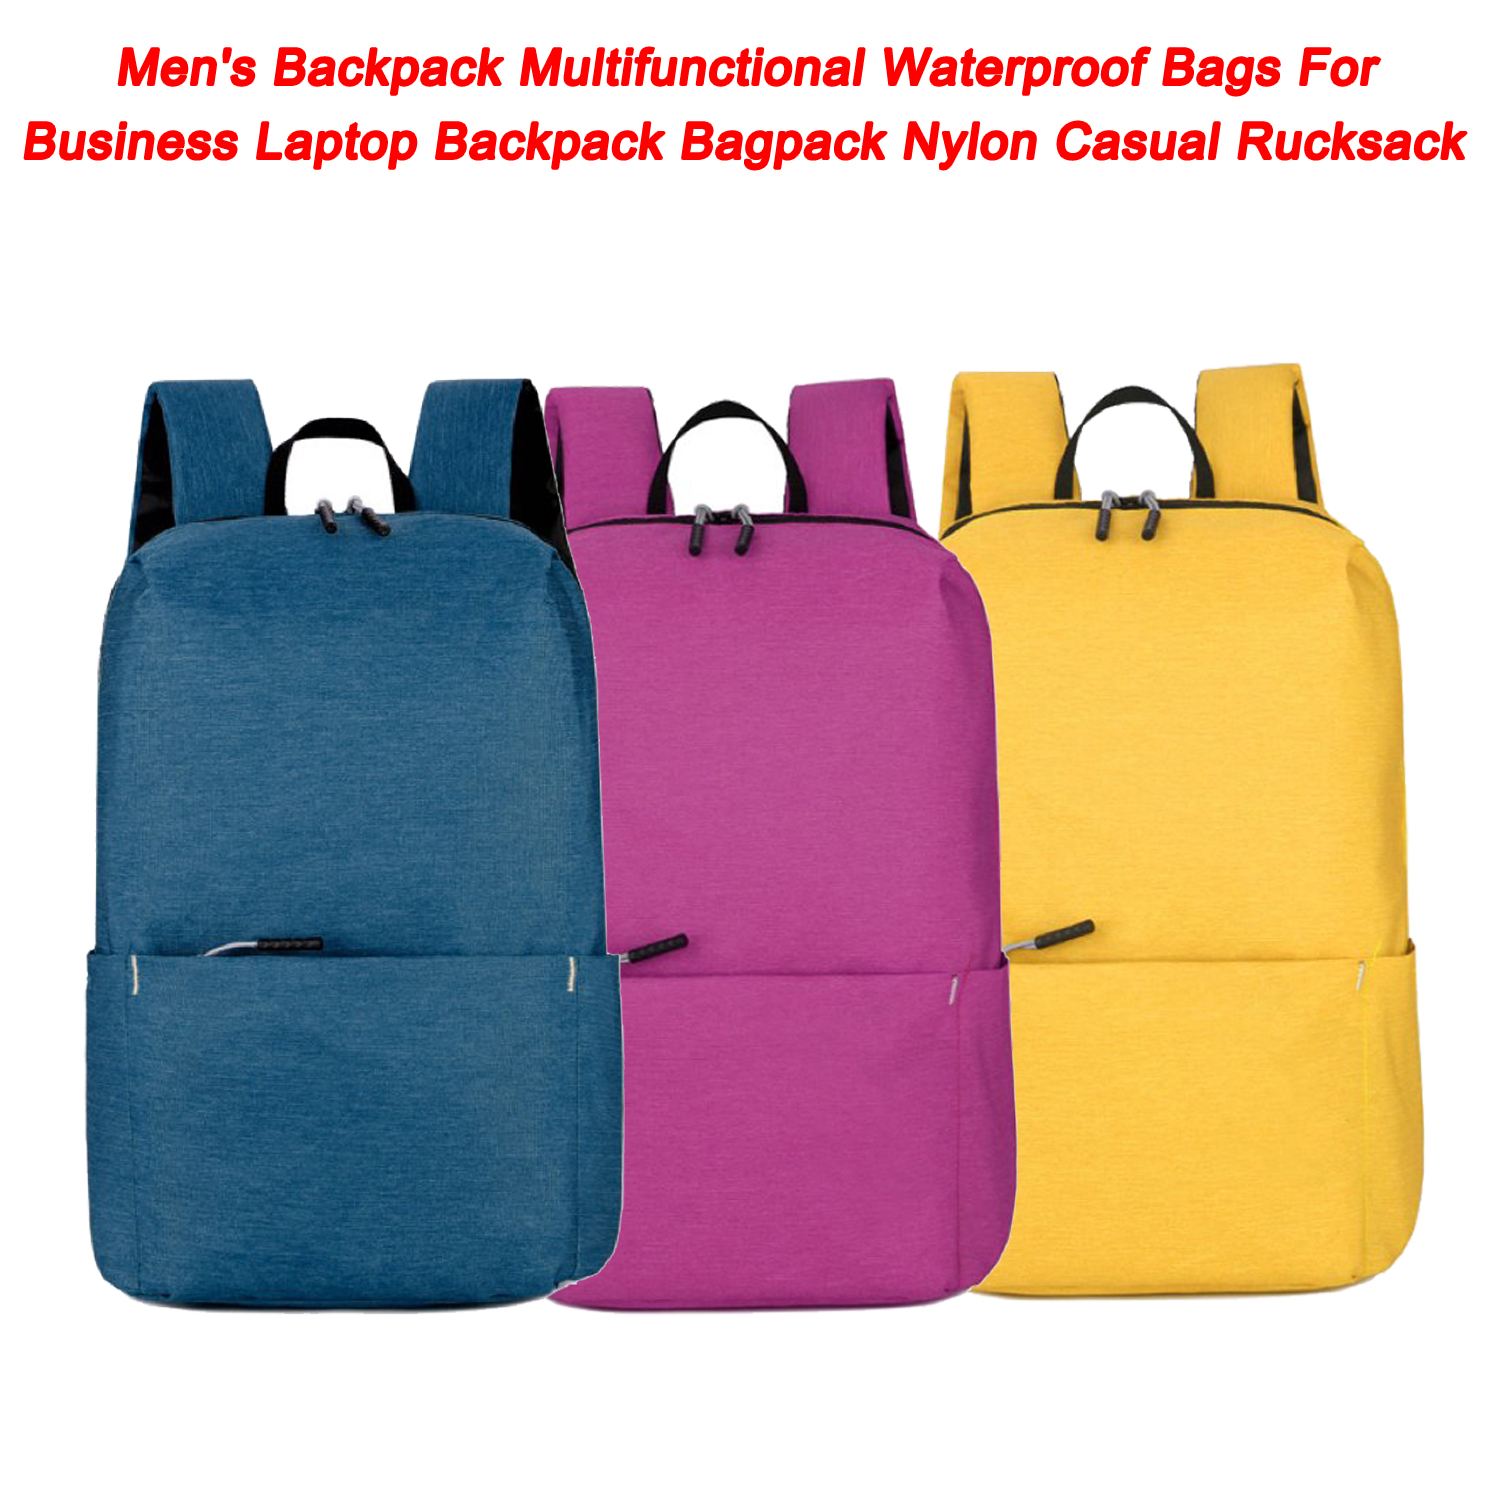 Mochila para hombre, bolsas impermeables multifuncionales para negocios, mochila para portátil, mochila informal de nailon